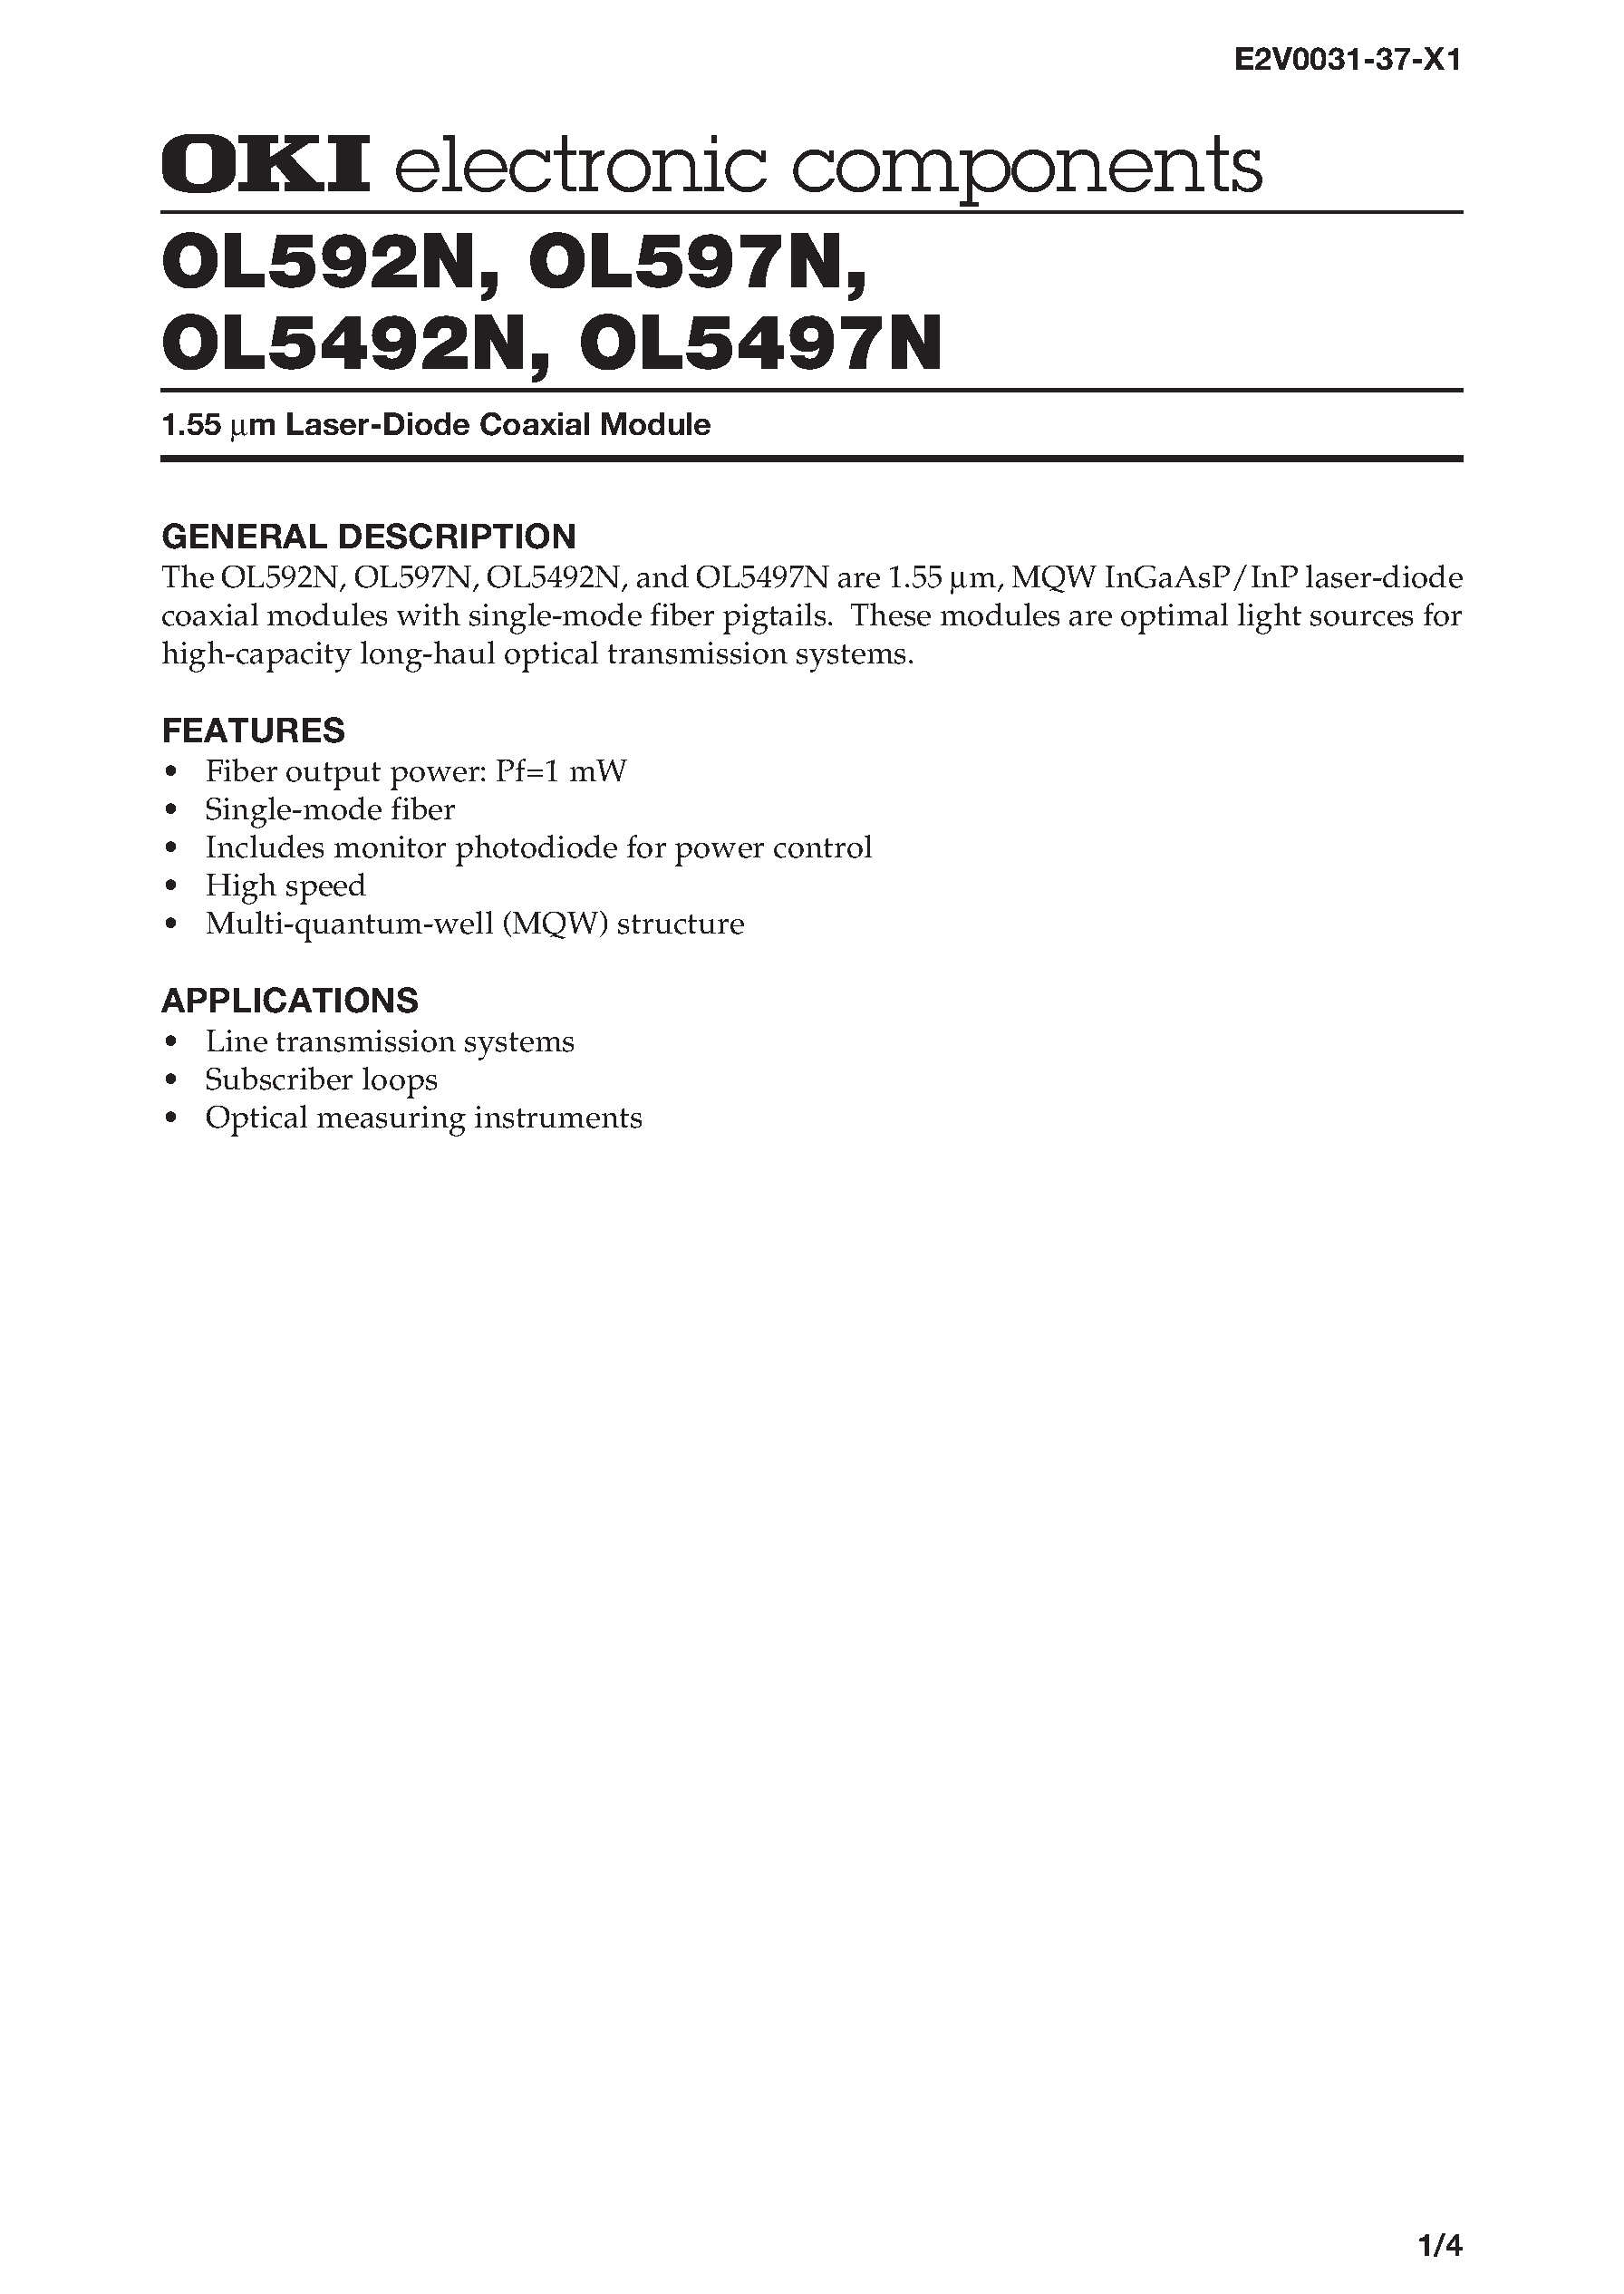 Datasheet OL5492N - 1.55 m Laser-Diode Coaxial Module page 1